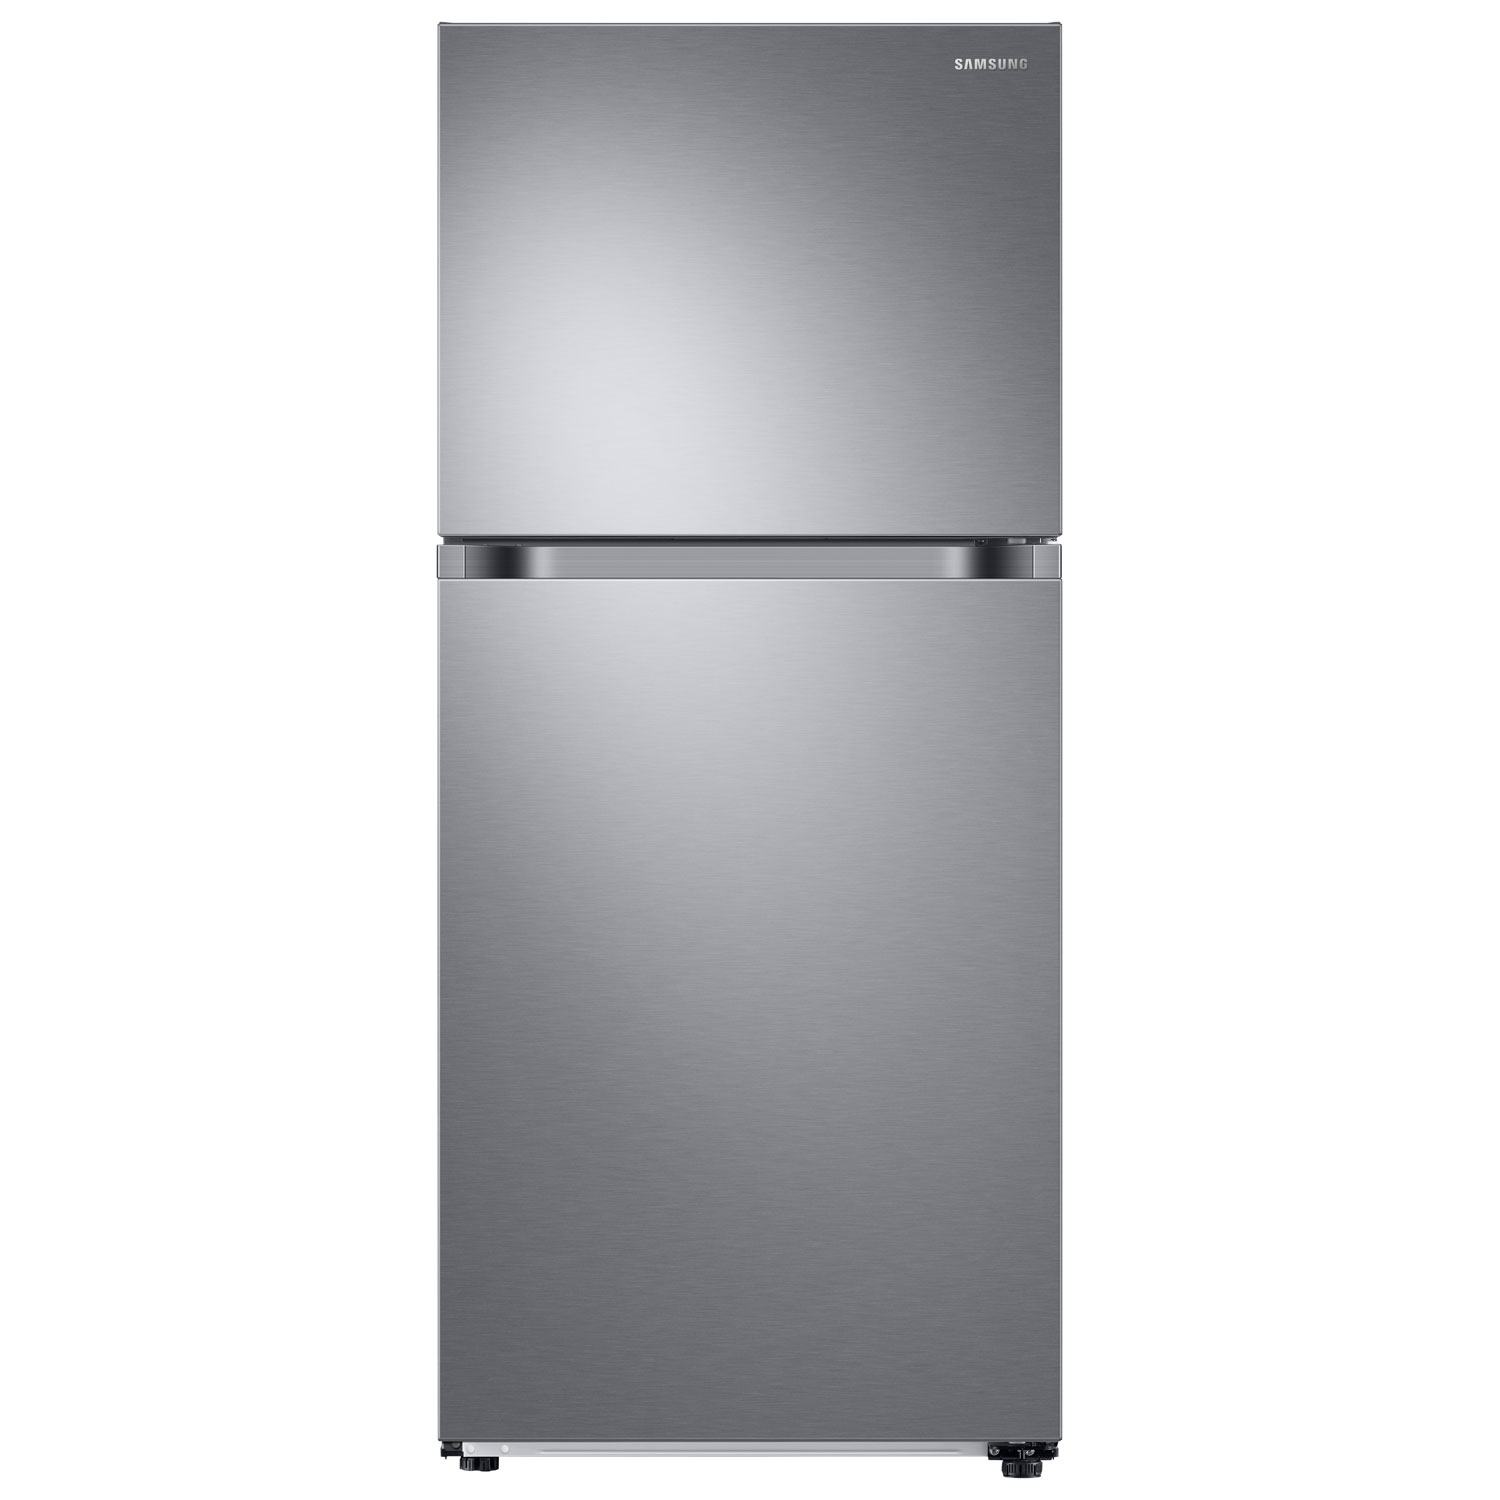 Samsung 30" 17.6 Cu. Ft. Top Freezer Refrigerator (RT18M6114SR/AA) - Stainless Steel